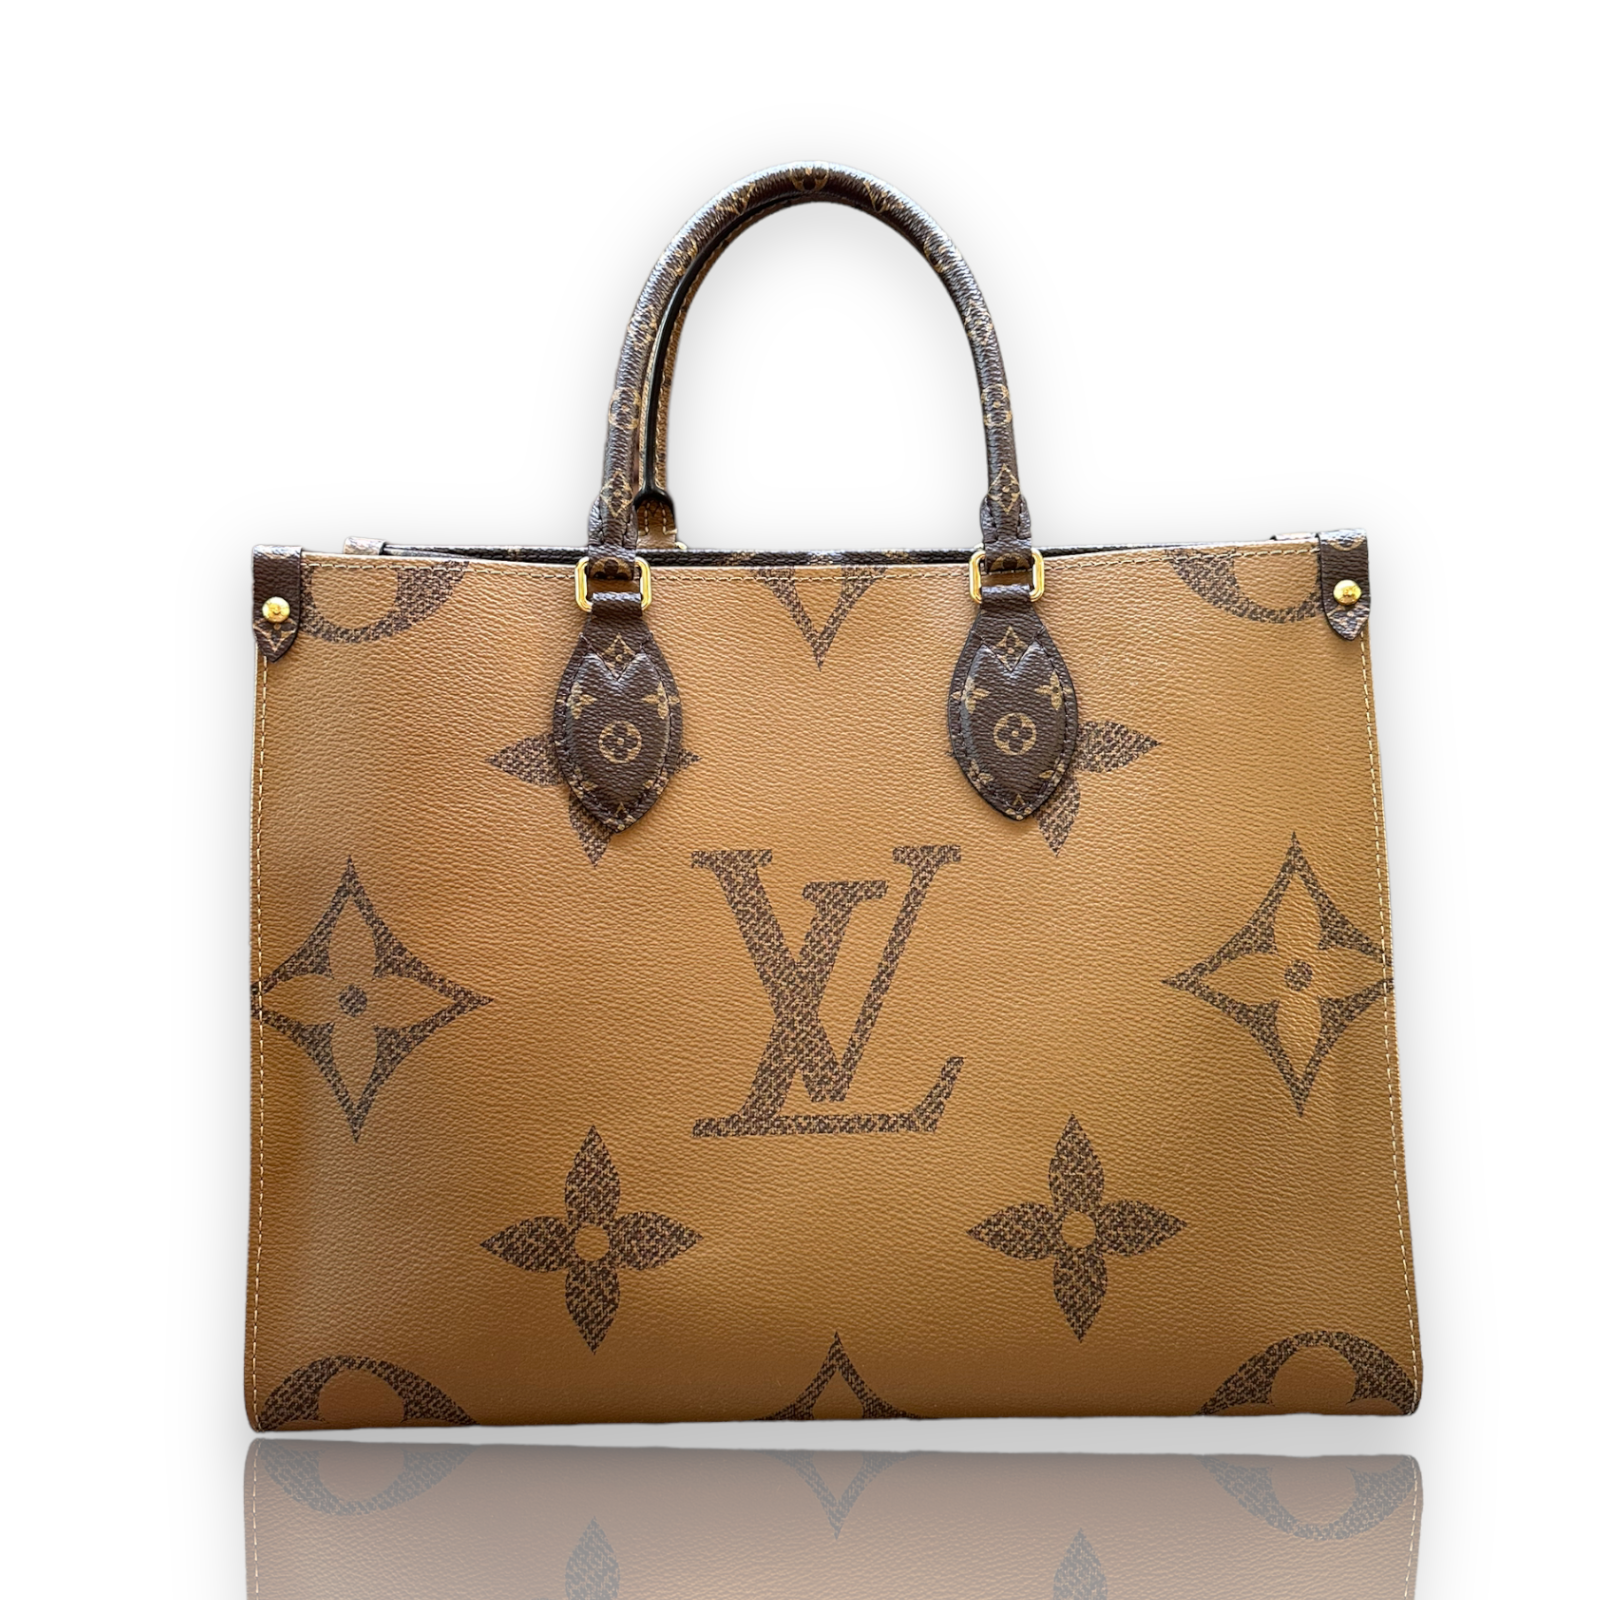 Sell Louis Vuitton Handbags - Get Cash Online Today